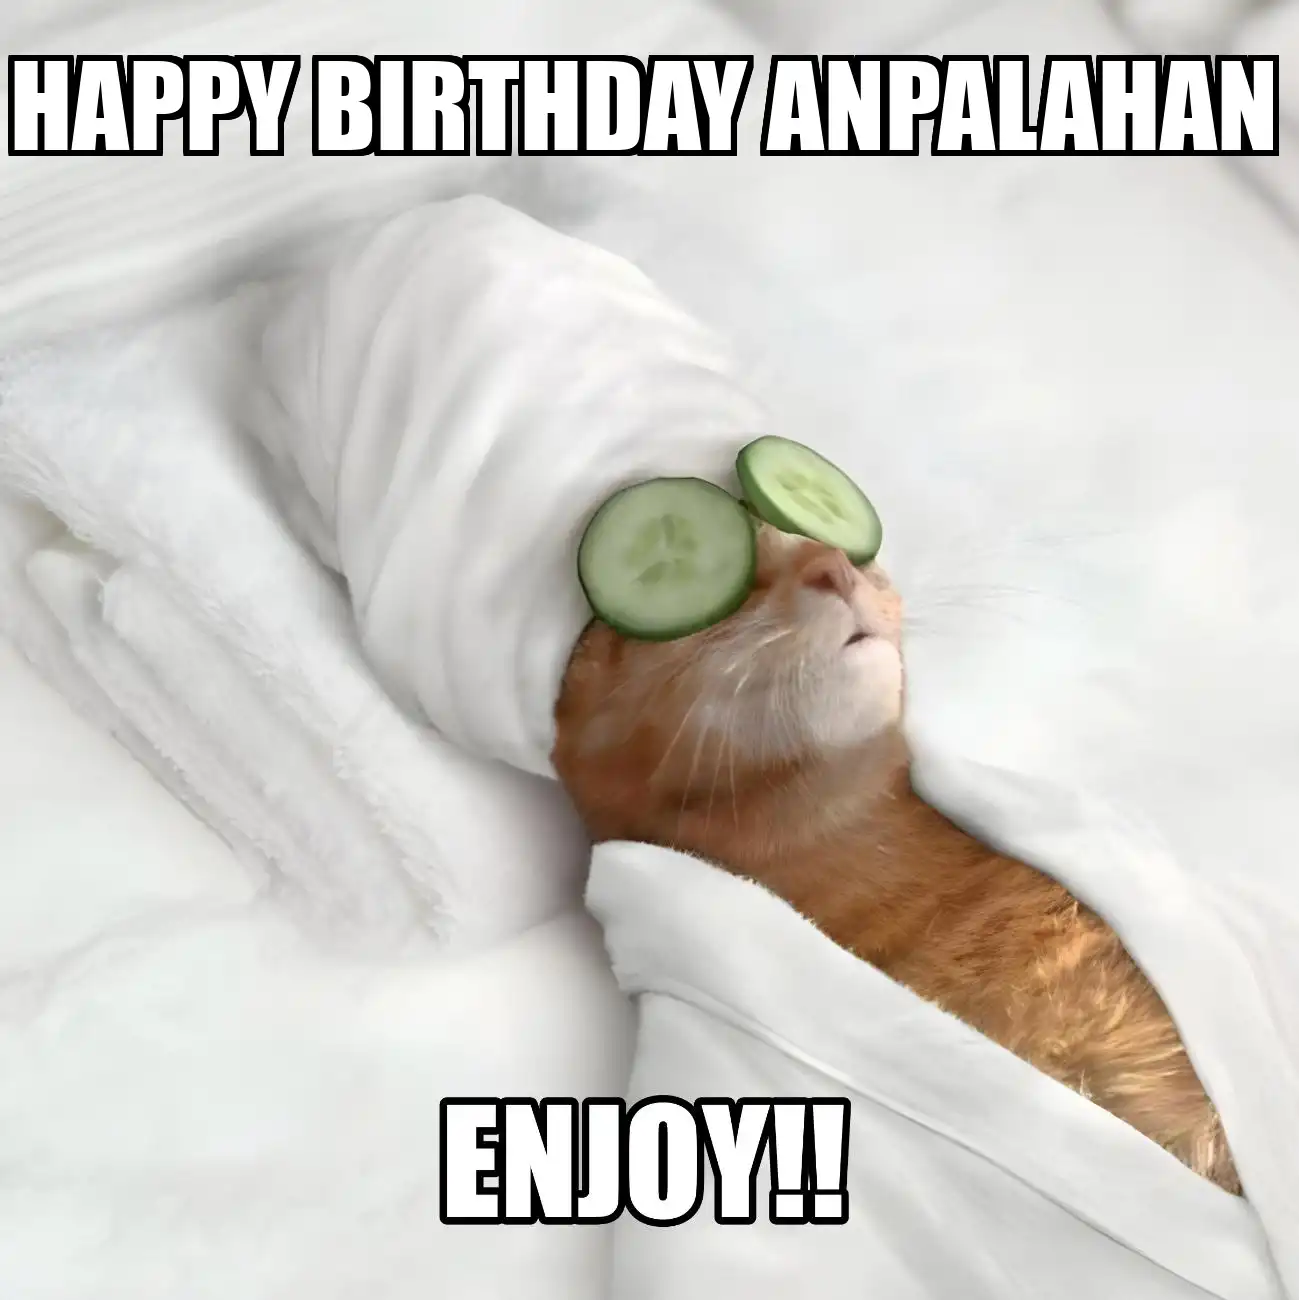 Happy Birthday Anpalahan Enjoy Cat Meme